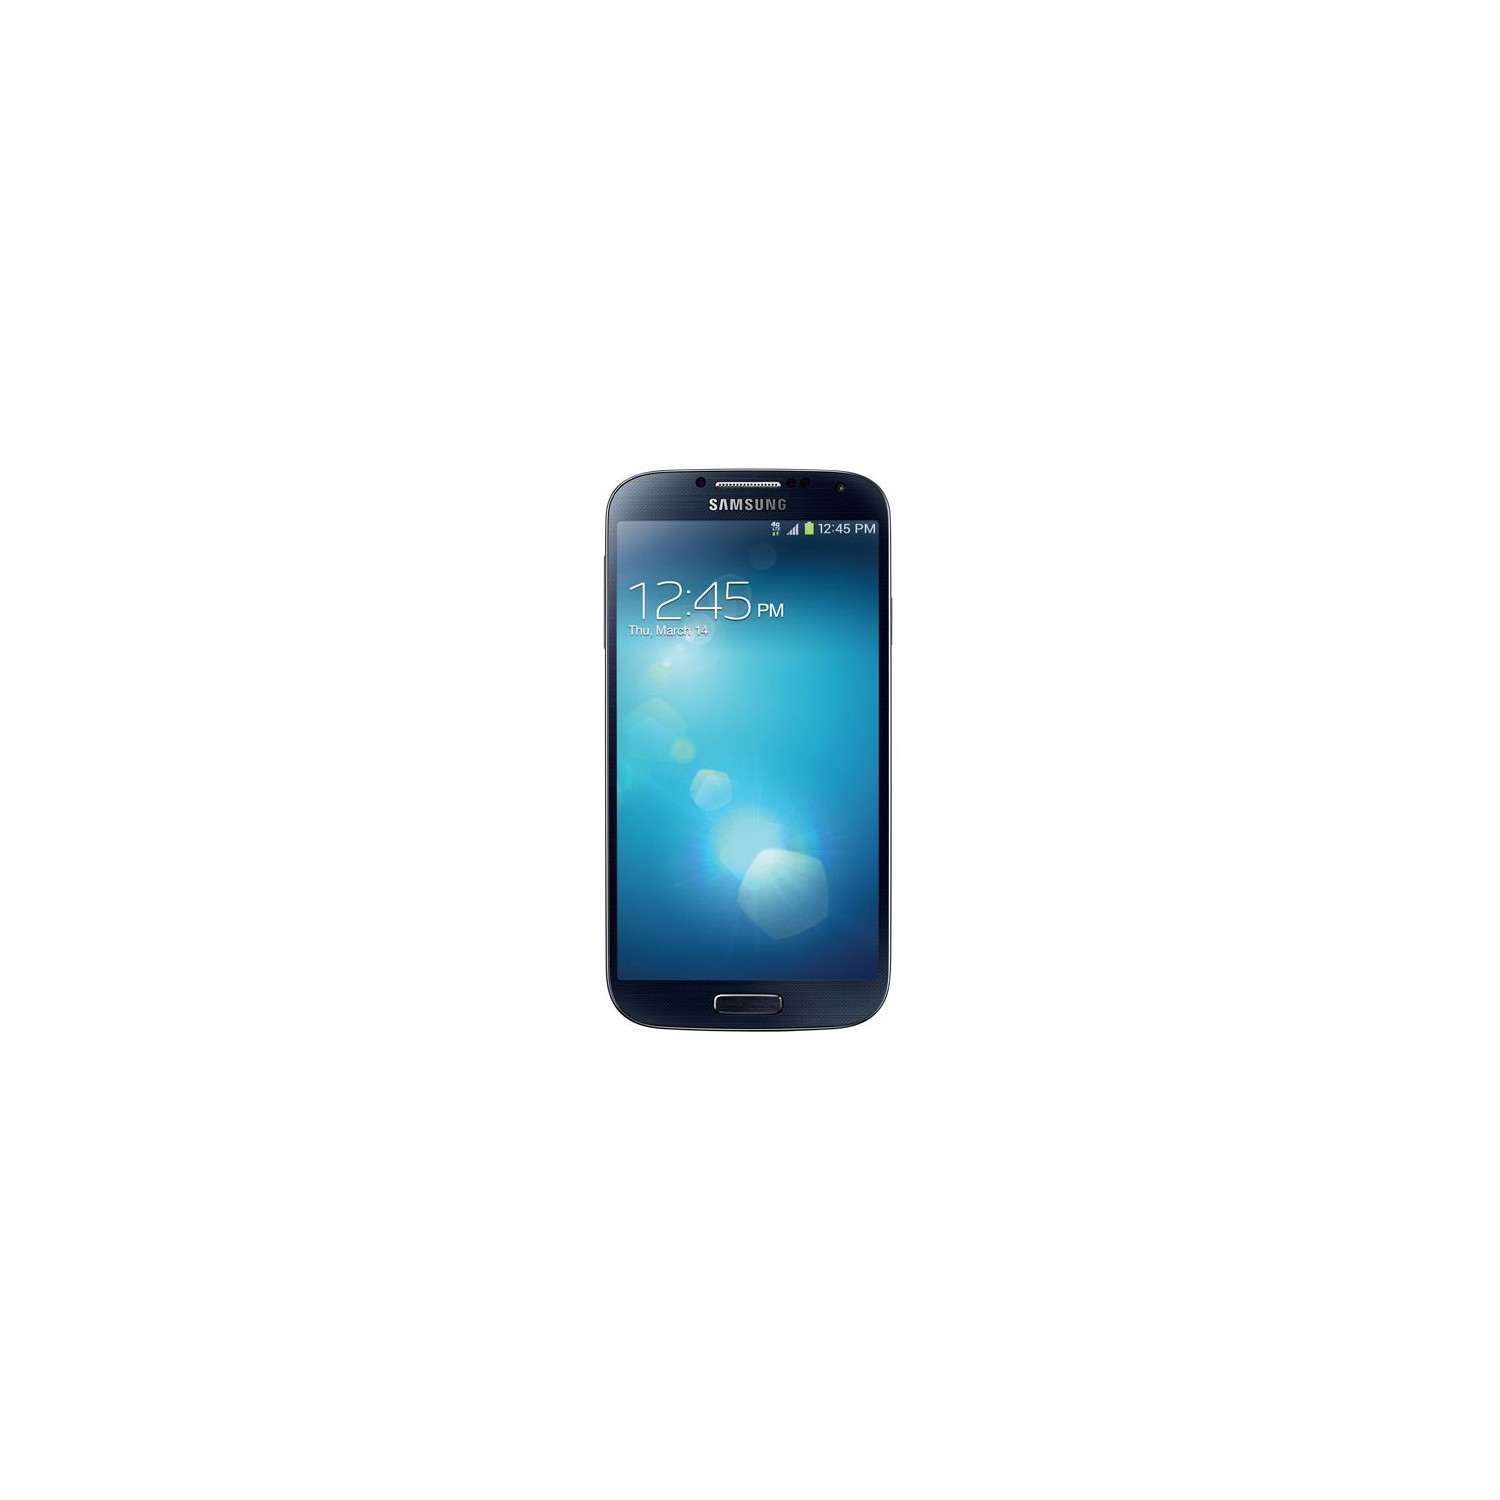 Refurbished (Excellent) - Samsung Galaxy S4 32gb GSM Unlocked Cellphone in Black Mist